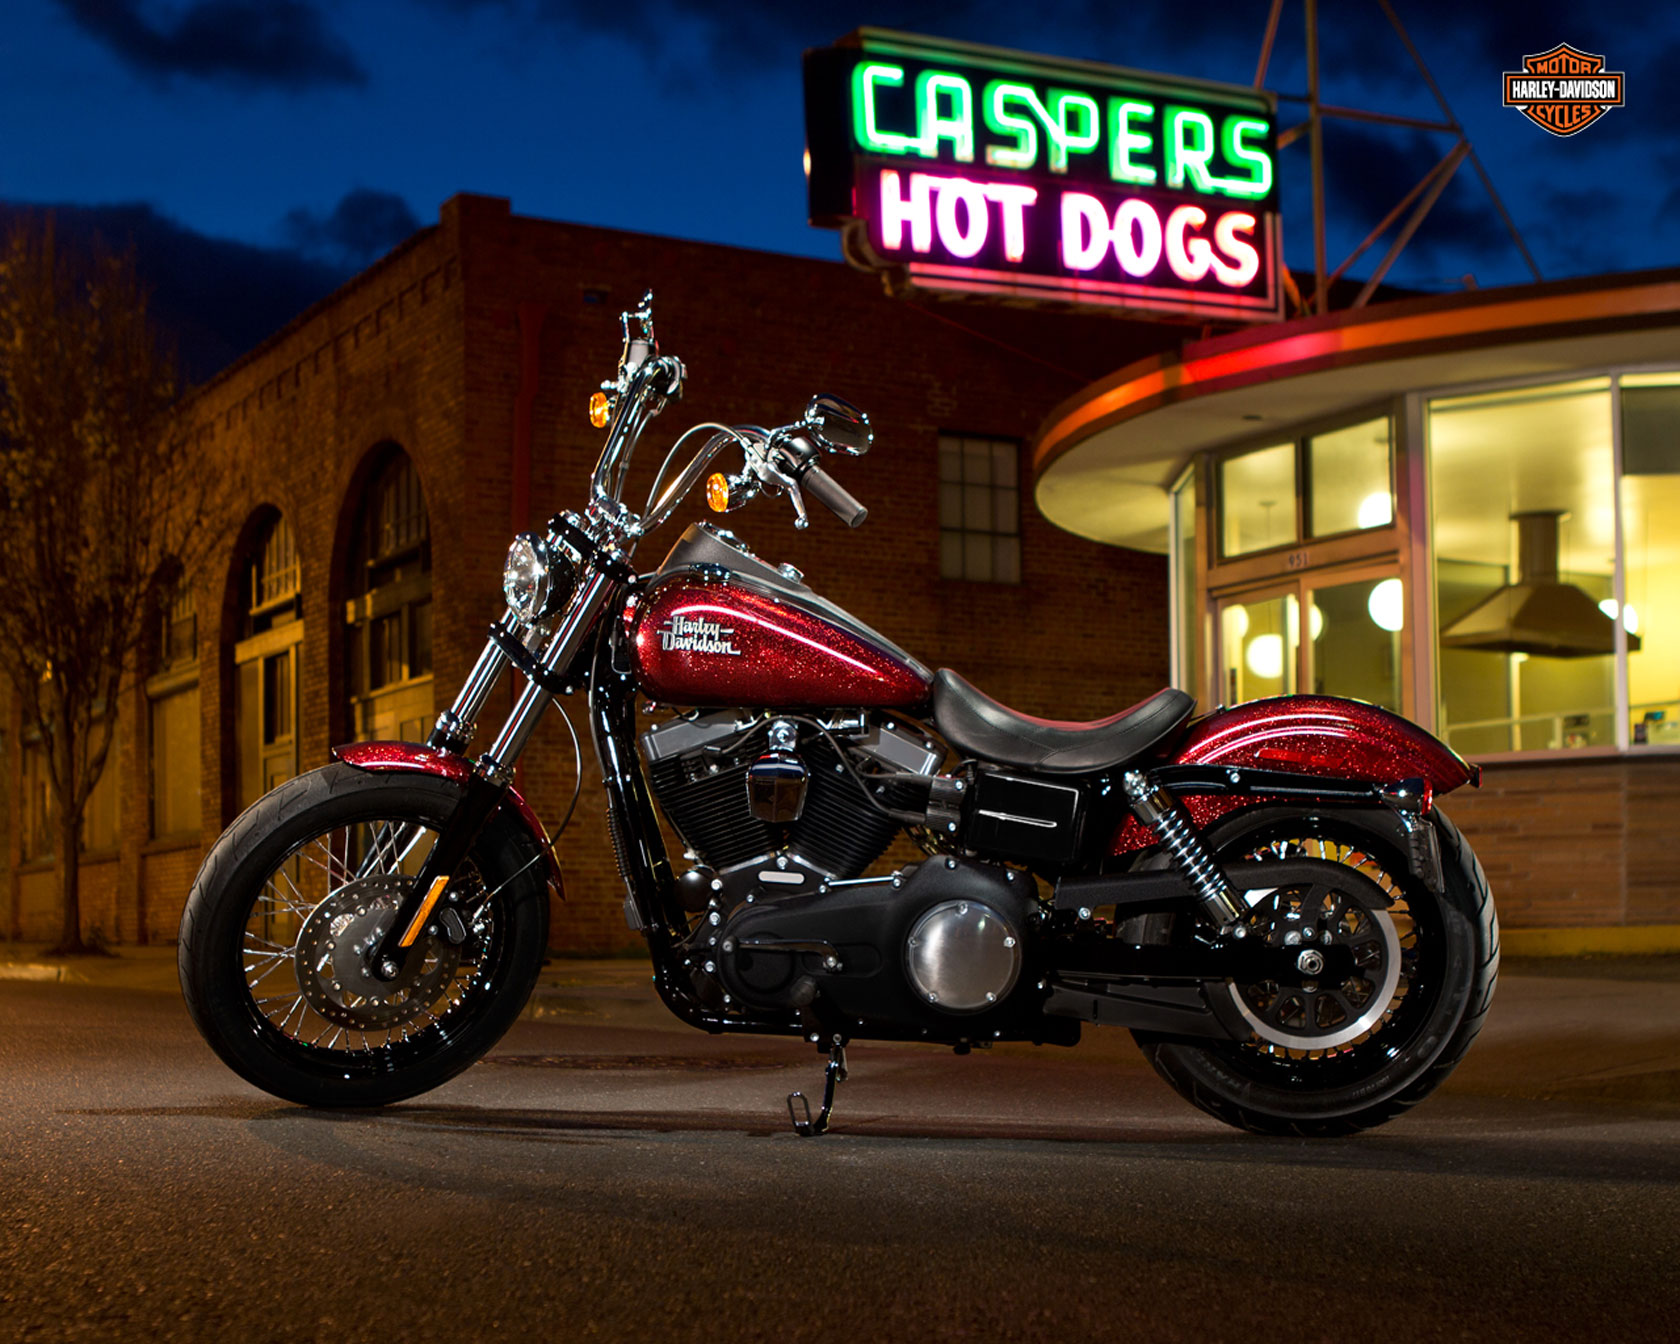 2013 Harley-Davidson FXDB Dyna Street Bob Review